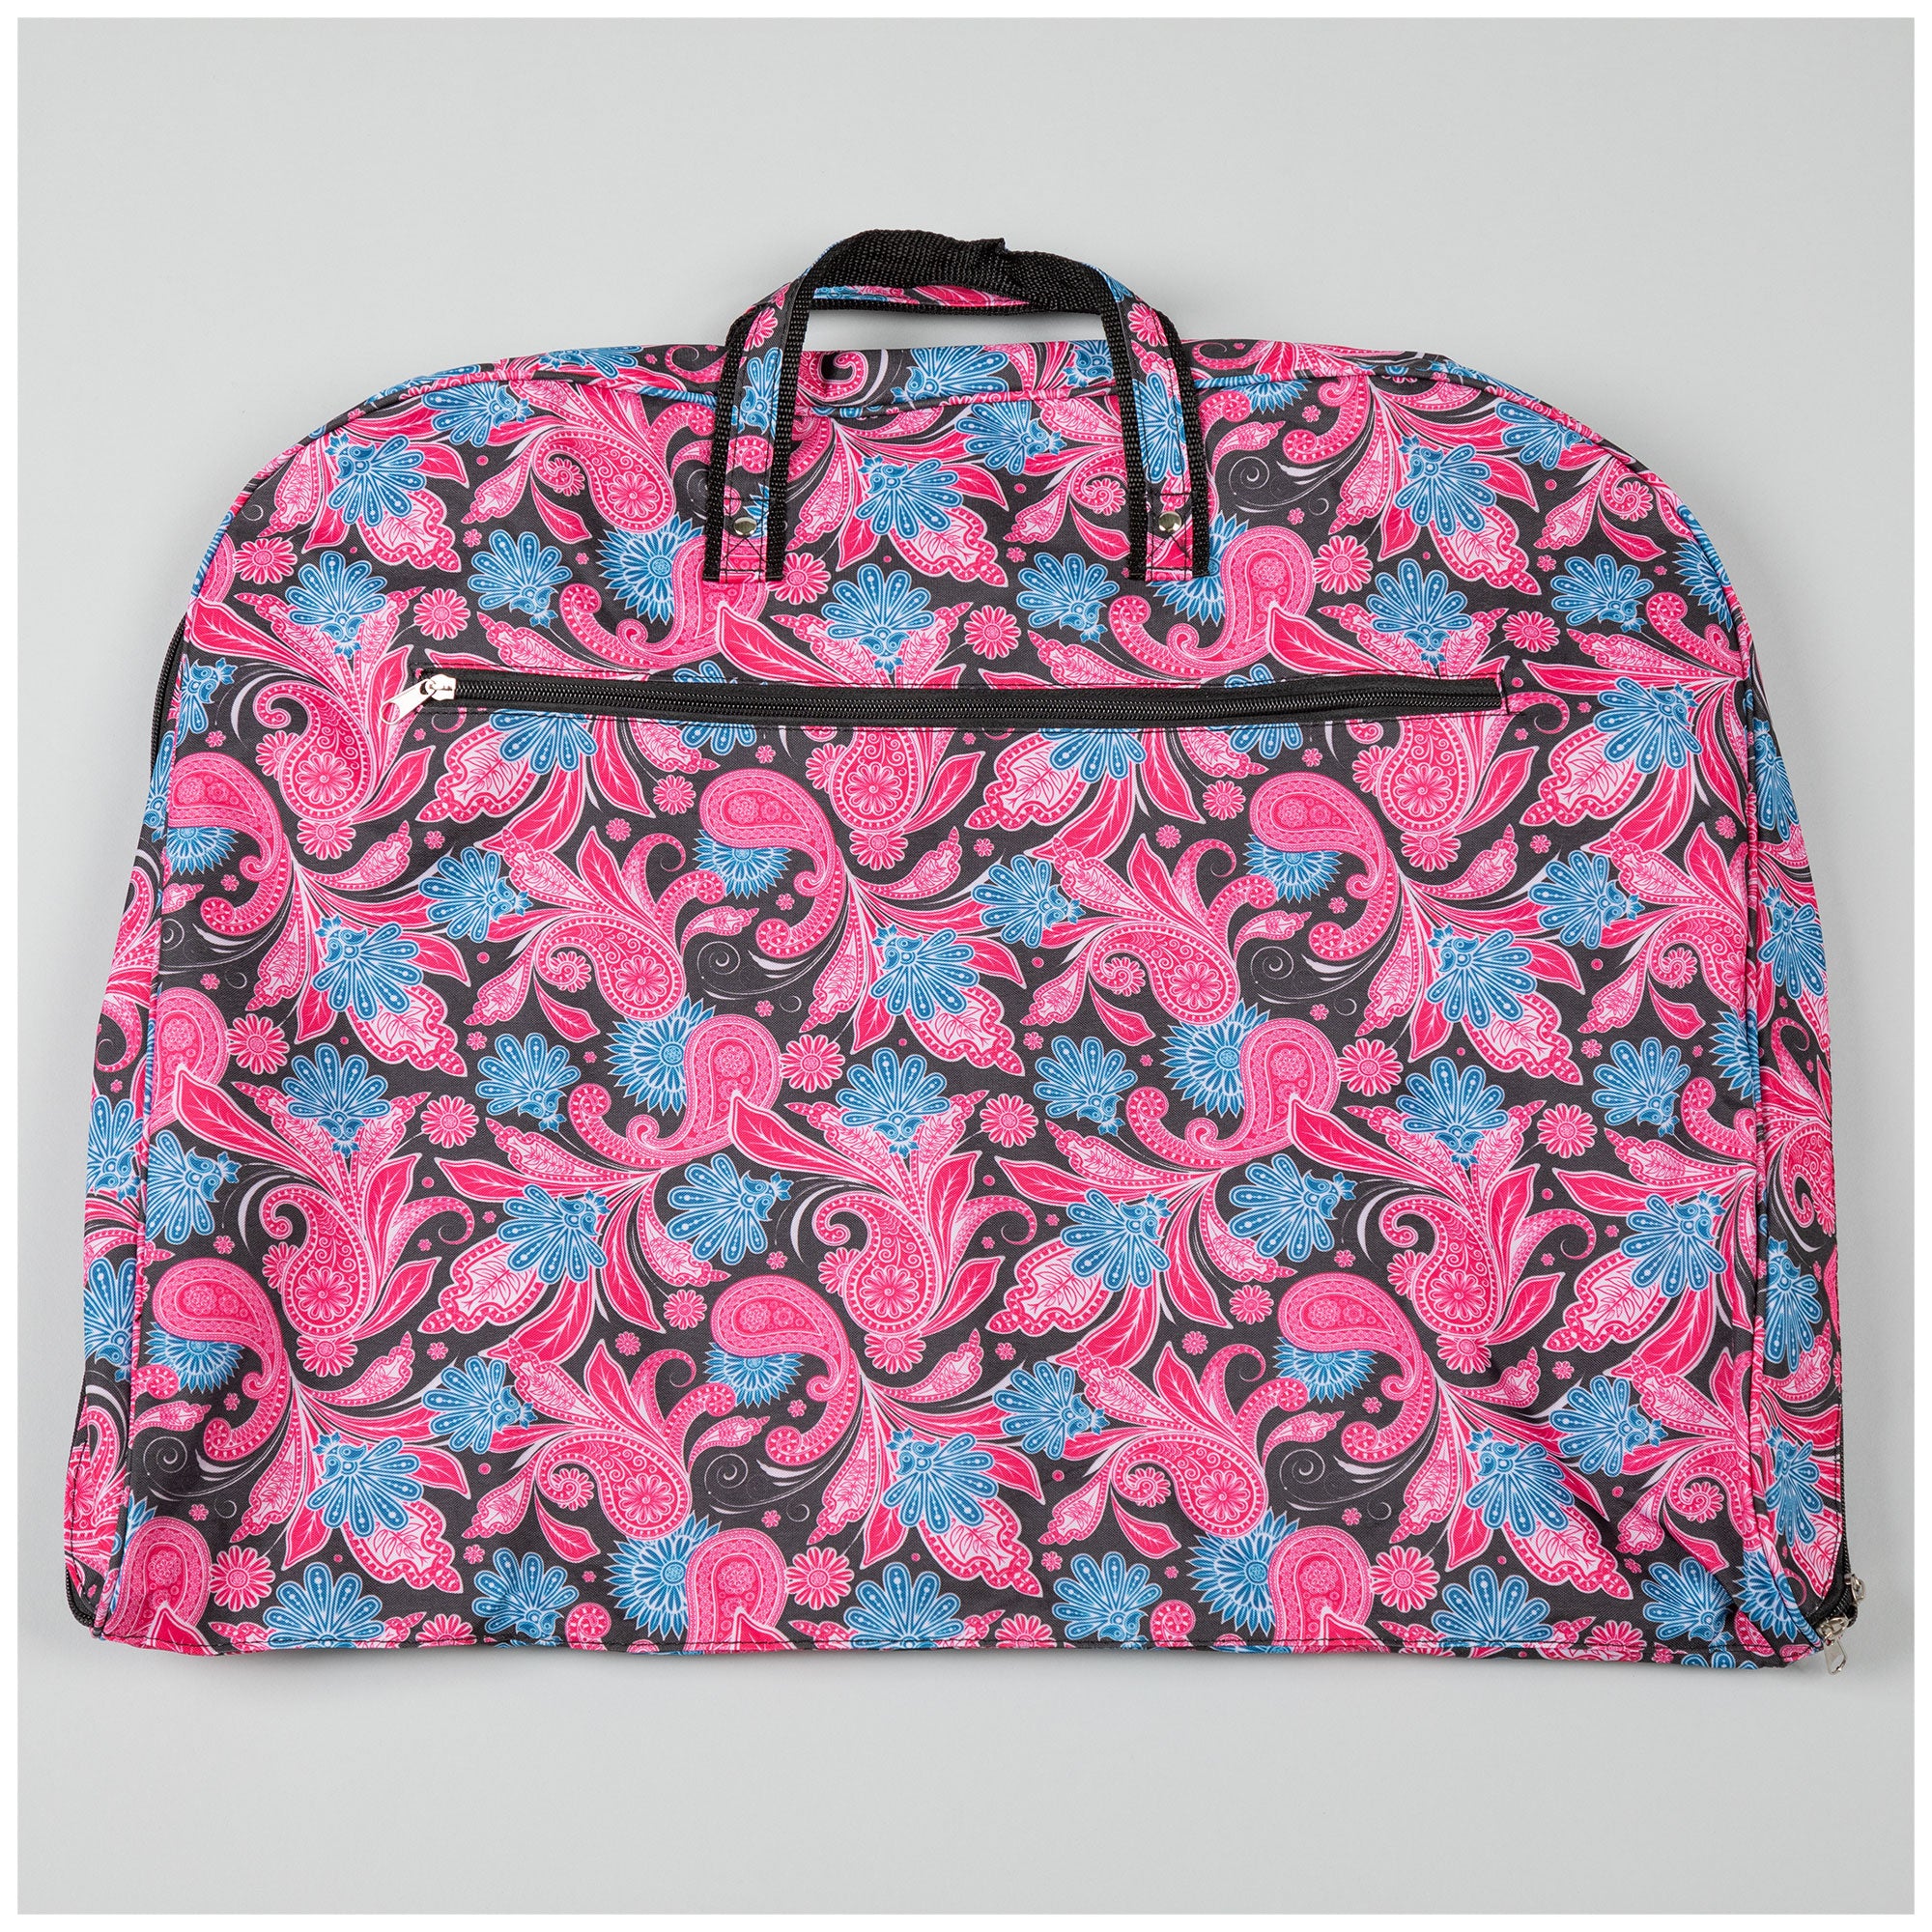 Microfiber Travel Garment Bag - Pink Black Paisley